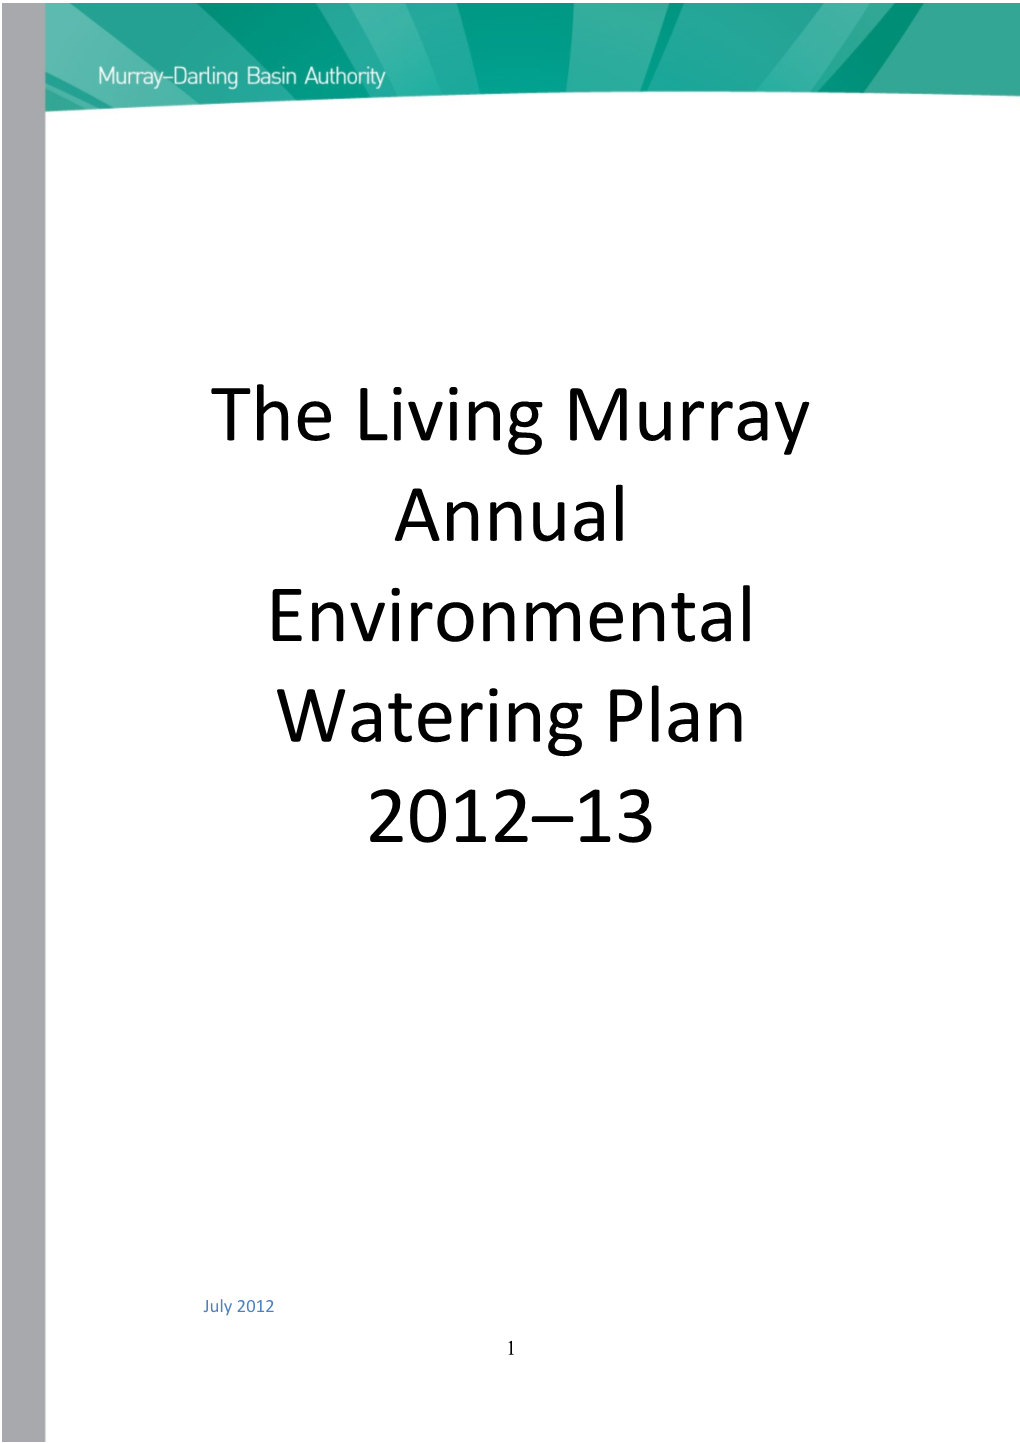 The Living Murray Annual Environmental Watering Plan 2012-13